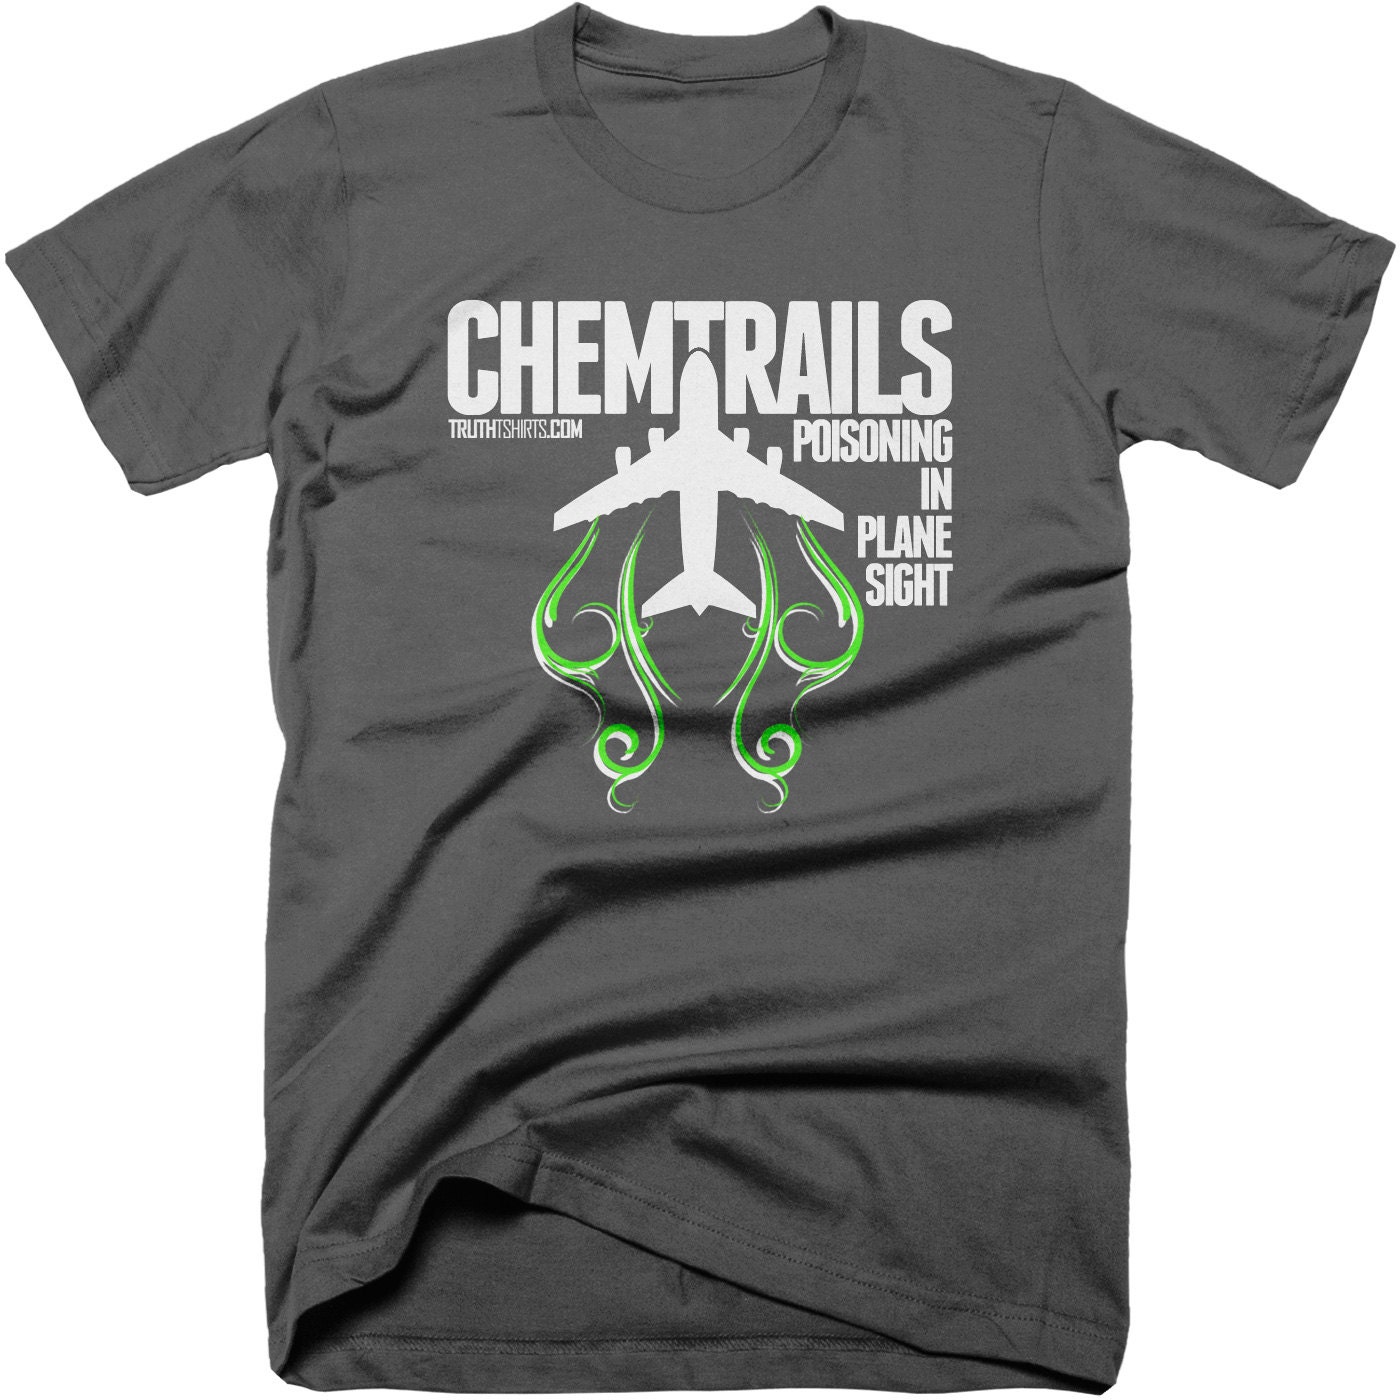 Chemtrails Poisoning T-shirt. Free Shipping. - Etsy